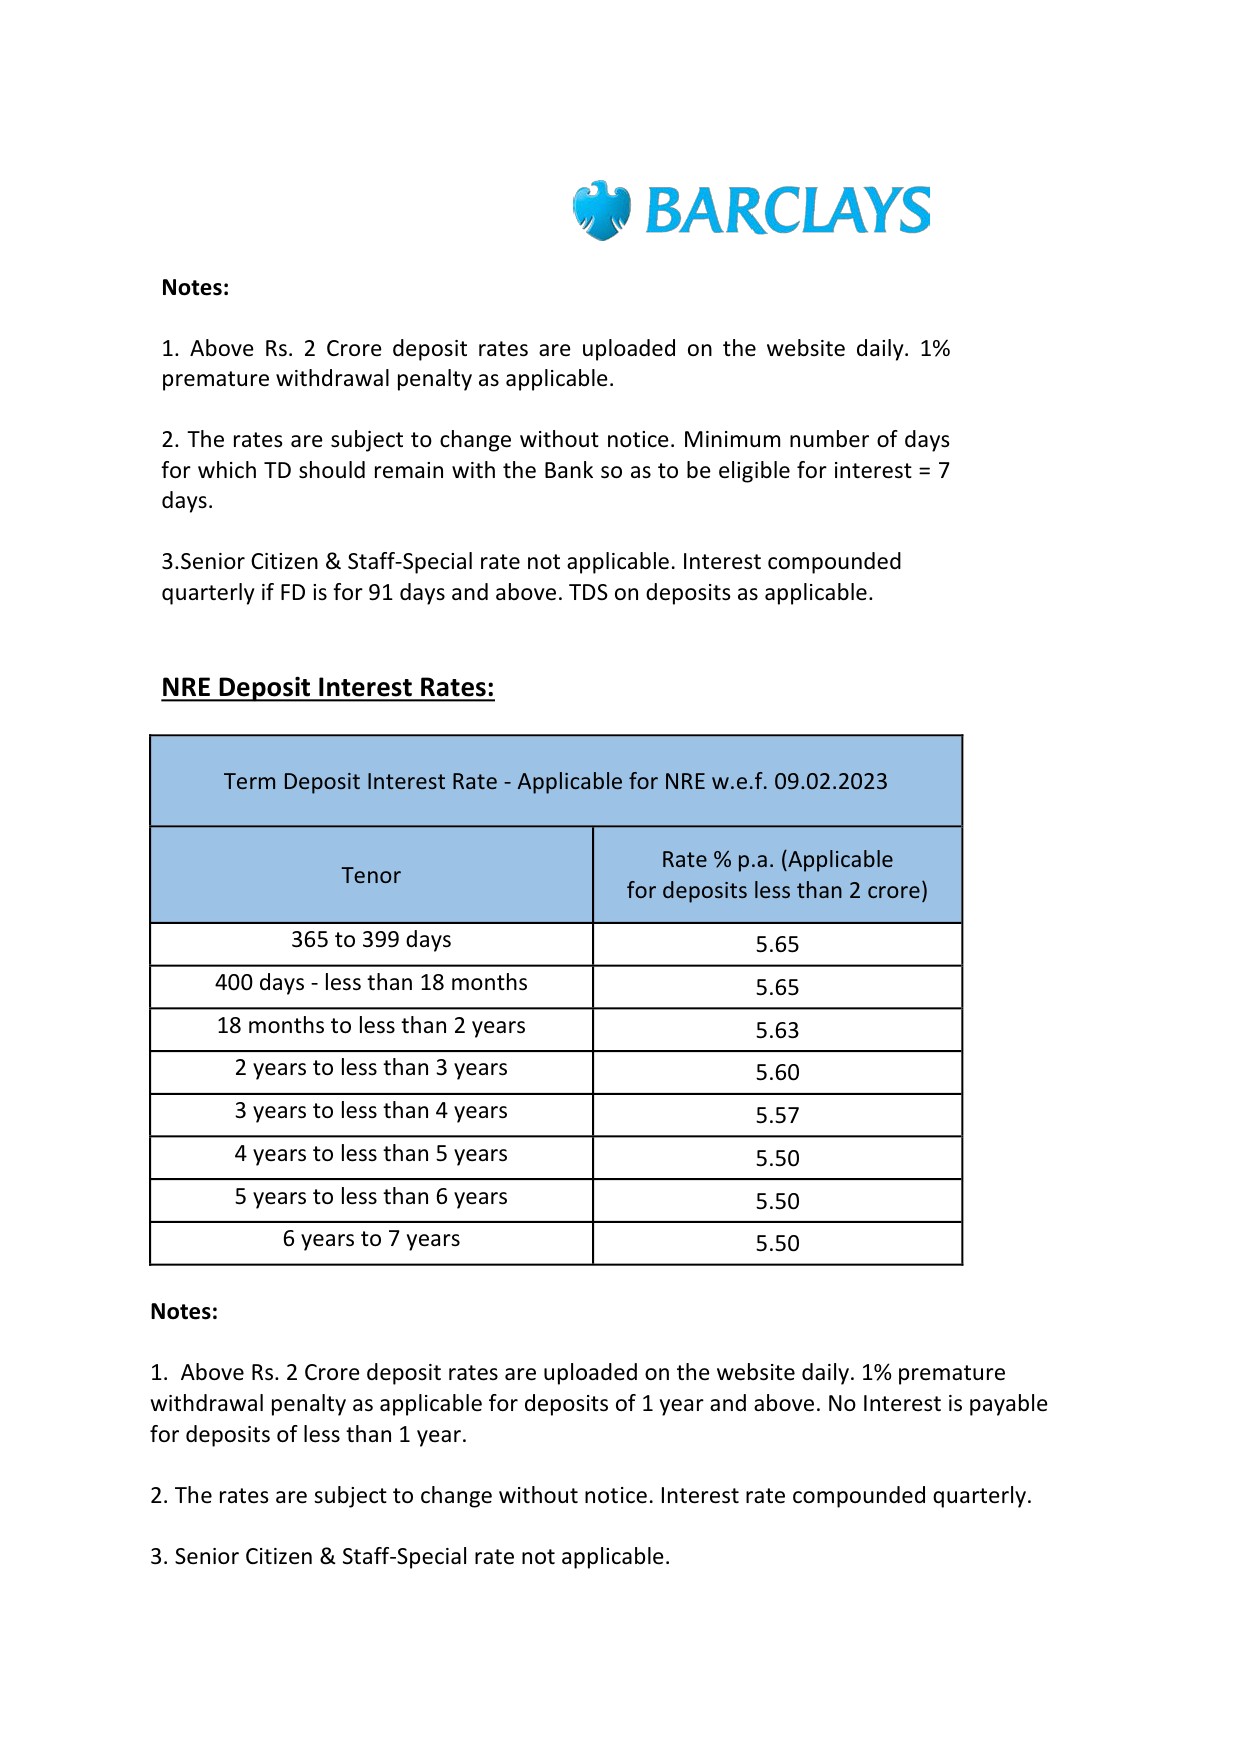 Fixed Deposit Interest Rates of Barclays Bank PLC - Image 2